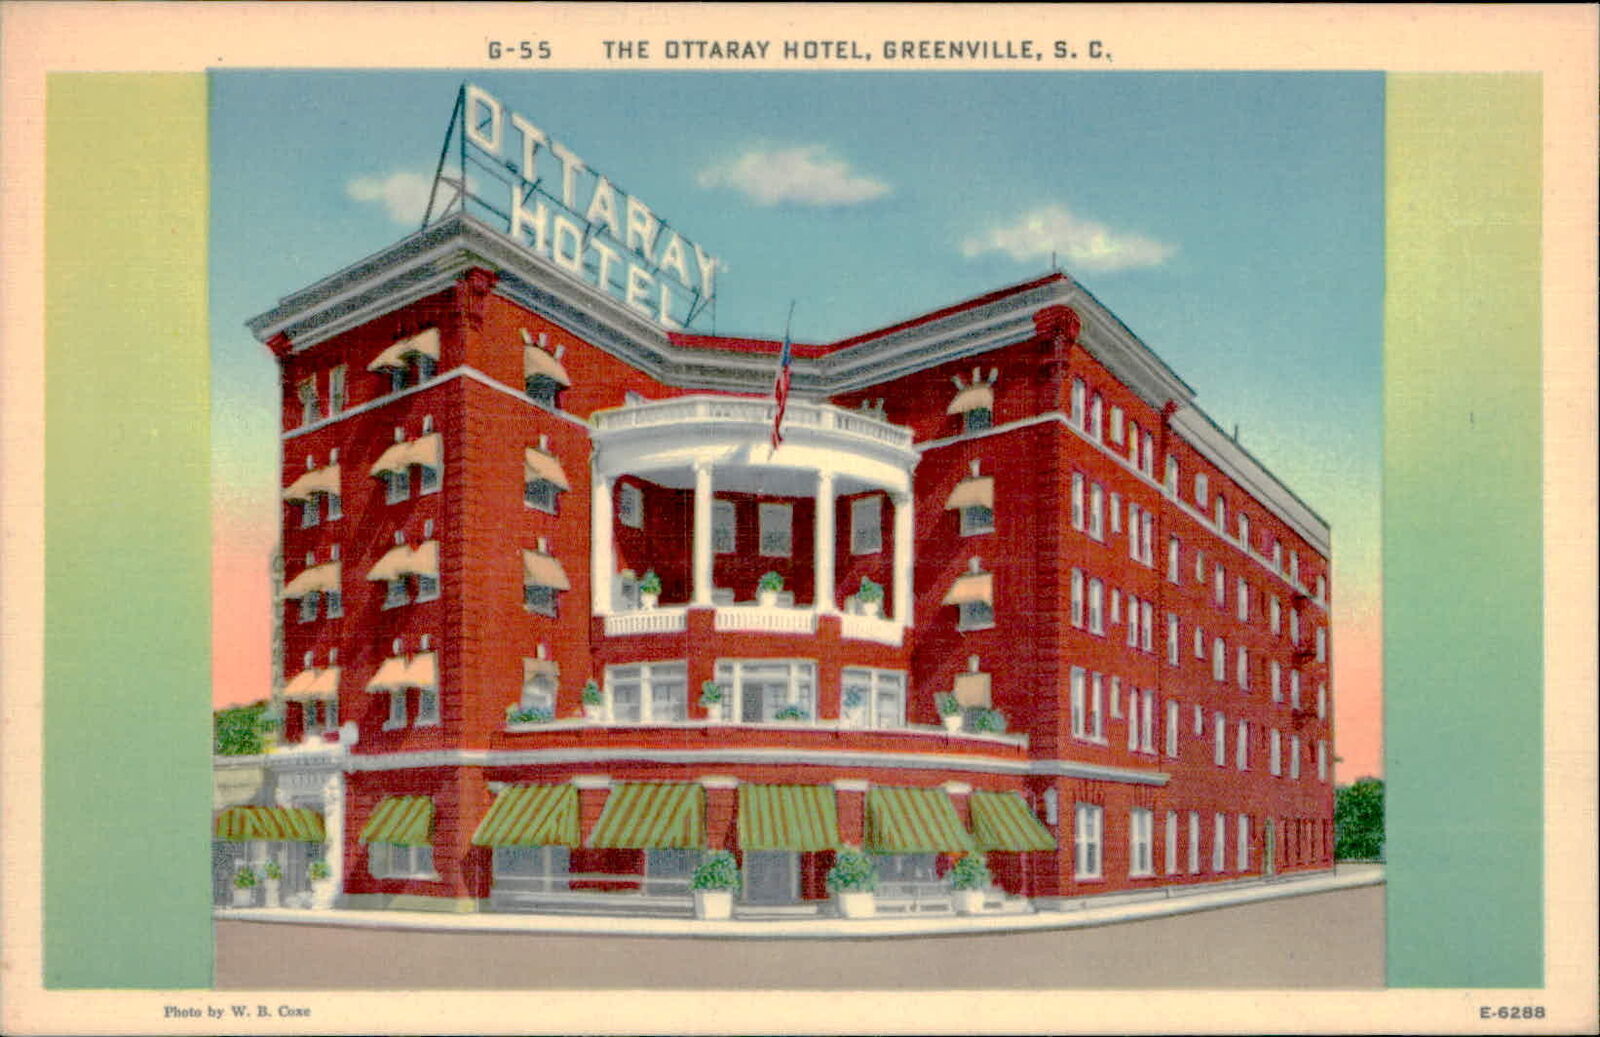 Postcard: Photo by W. B. Coxe G-55 THE OTTARAY HOTEL, GREENVILLE, S. C